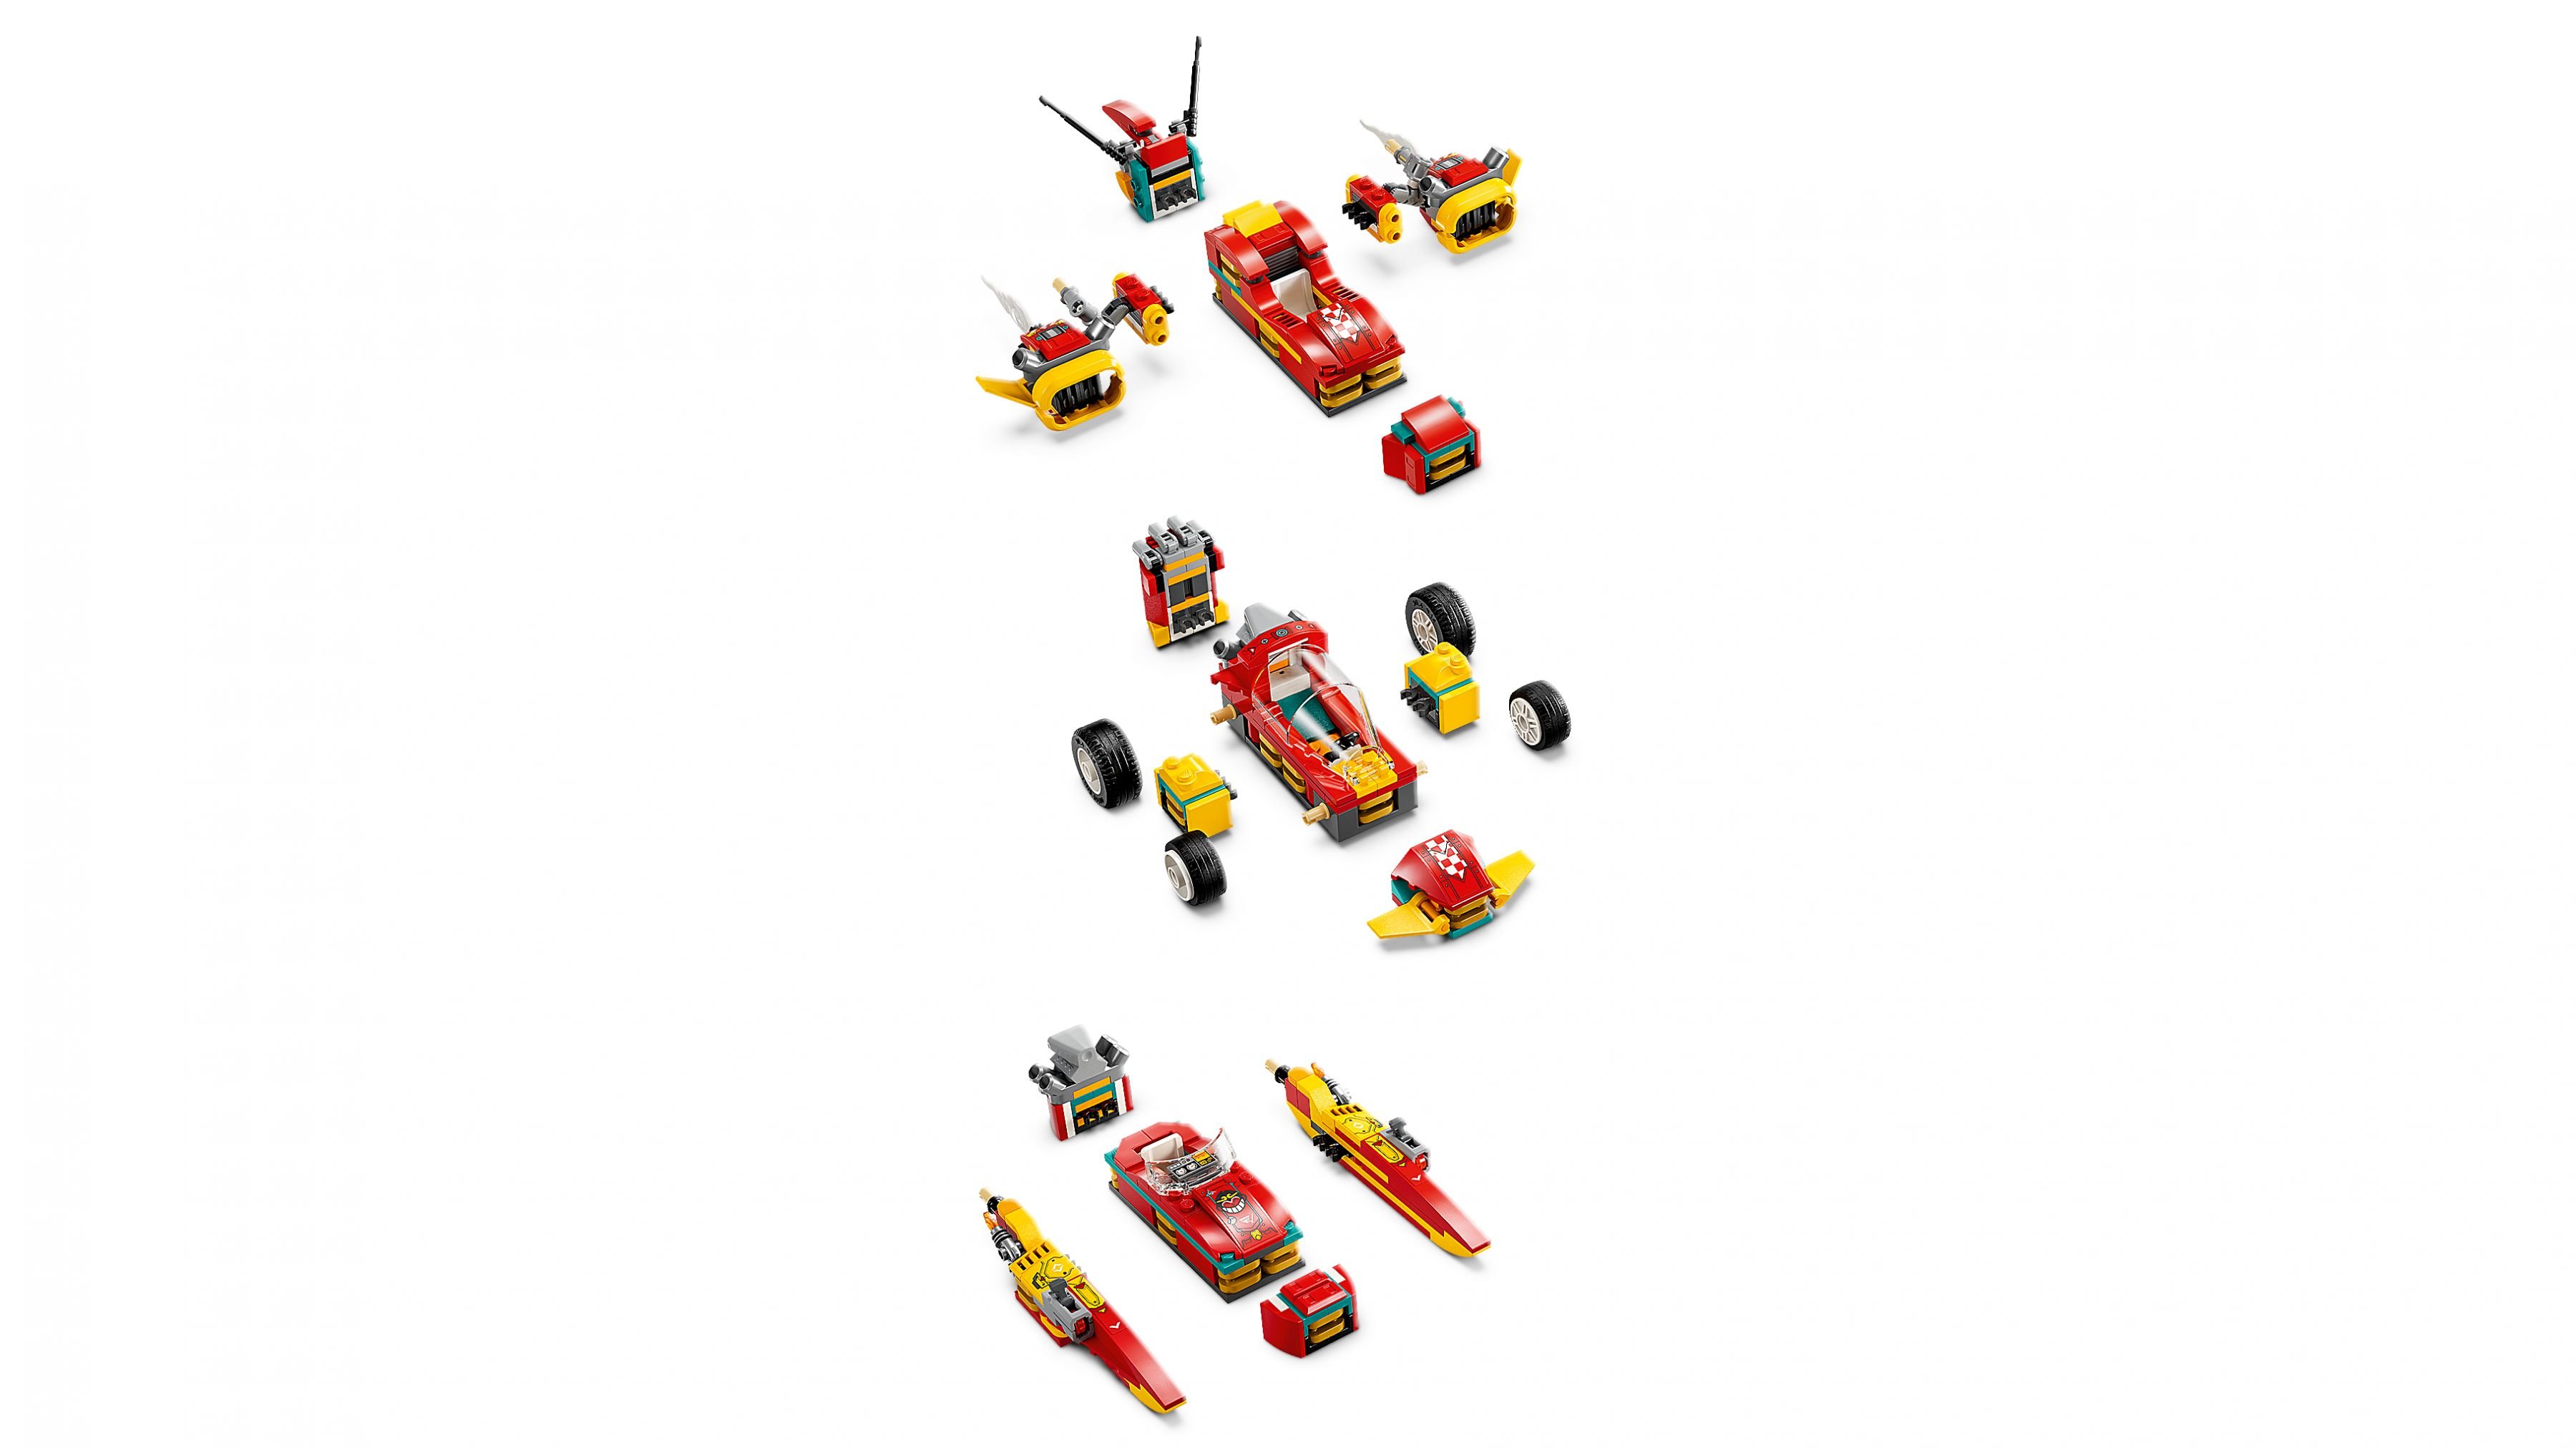 LEGO Monkie Kid 80050 Kreative Fahrzeuge LEGO_80050_web_sec01_nobg.jpg